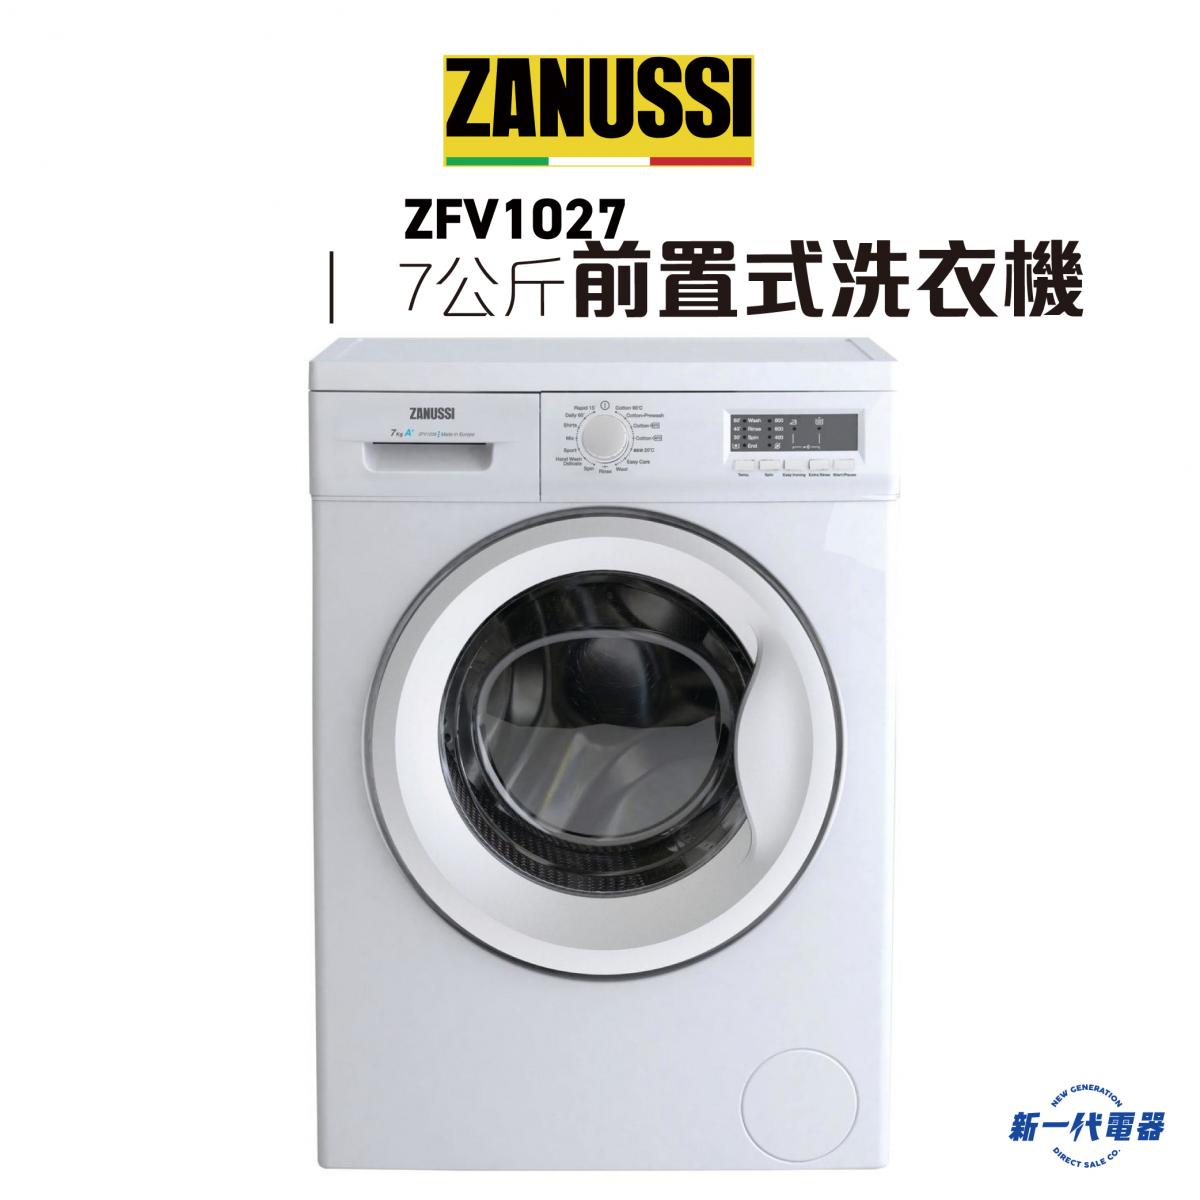 ZFV1027 -7KG 1000轉 前置式洗衣機 (ZFV-1027)